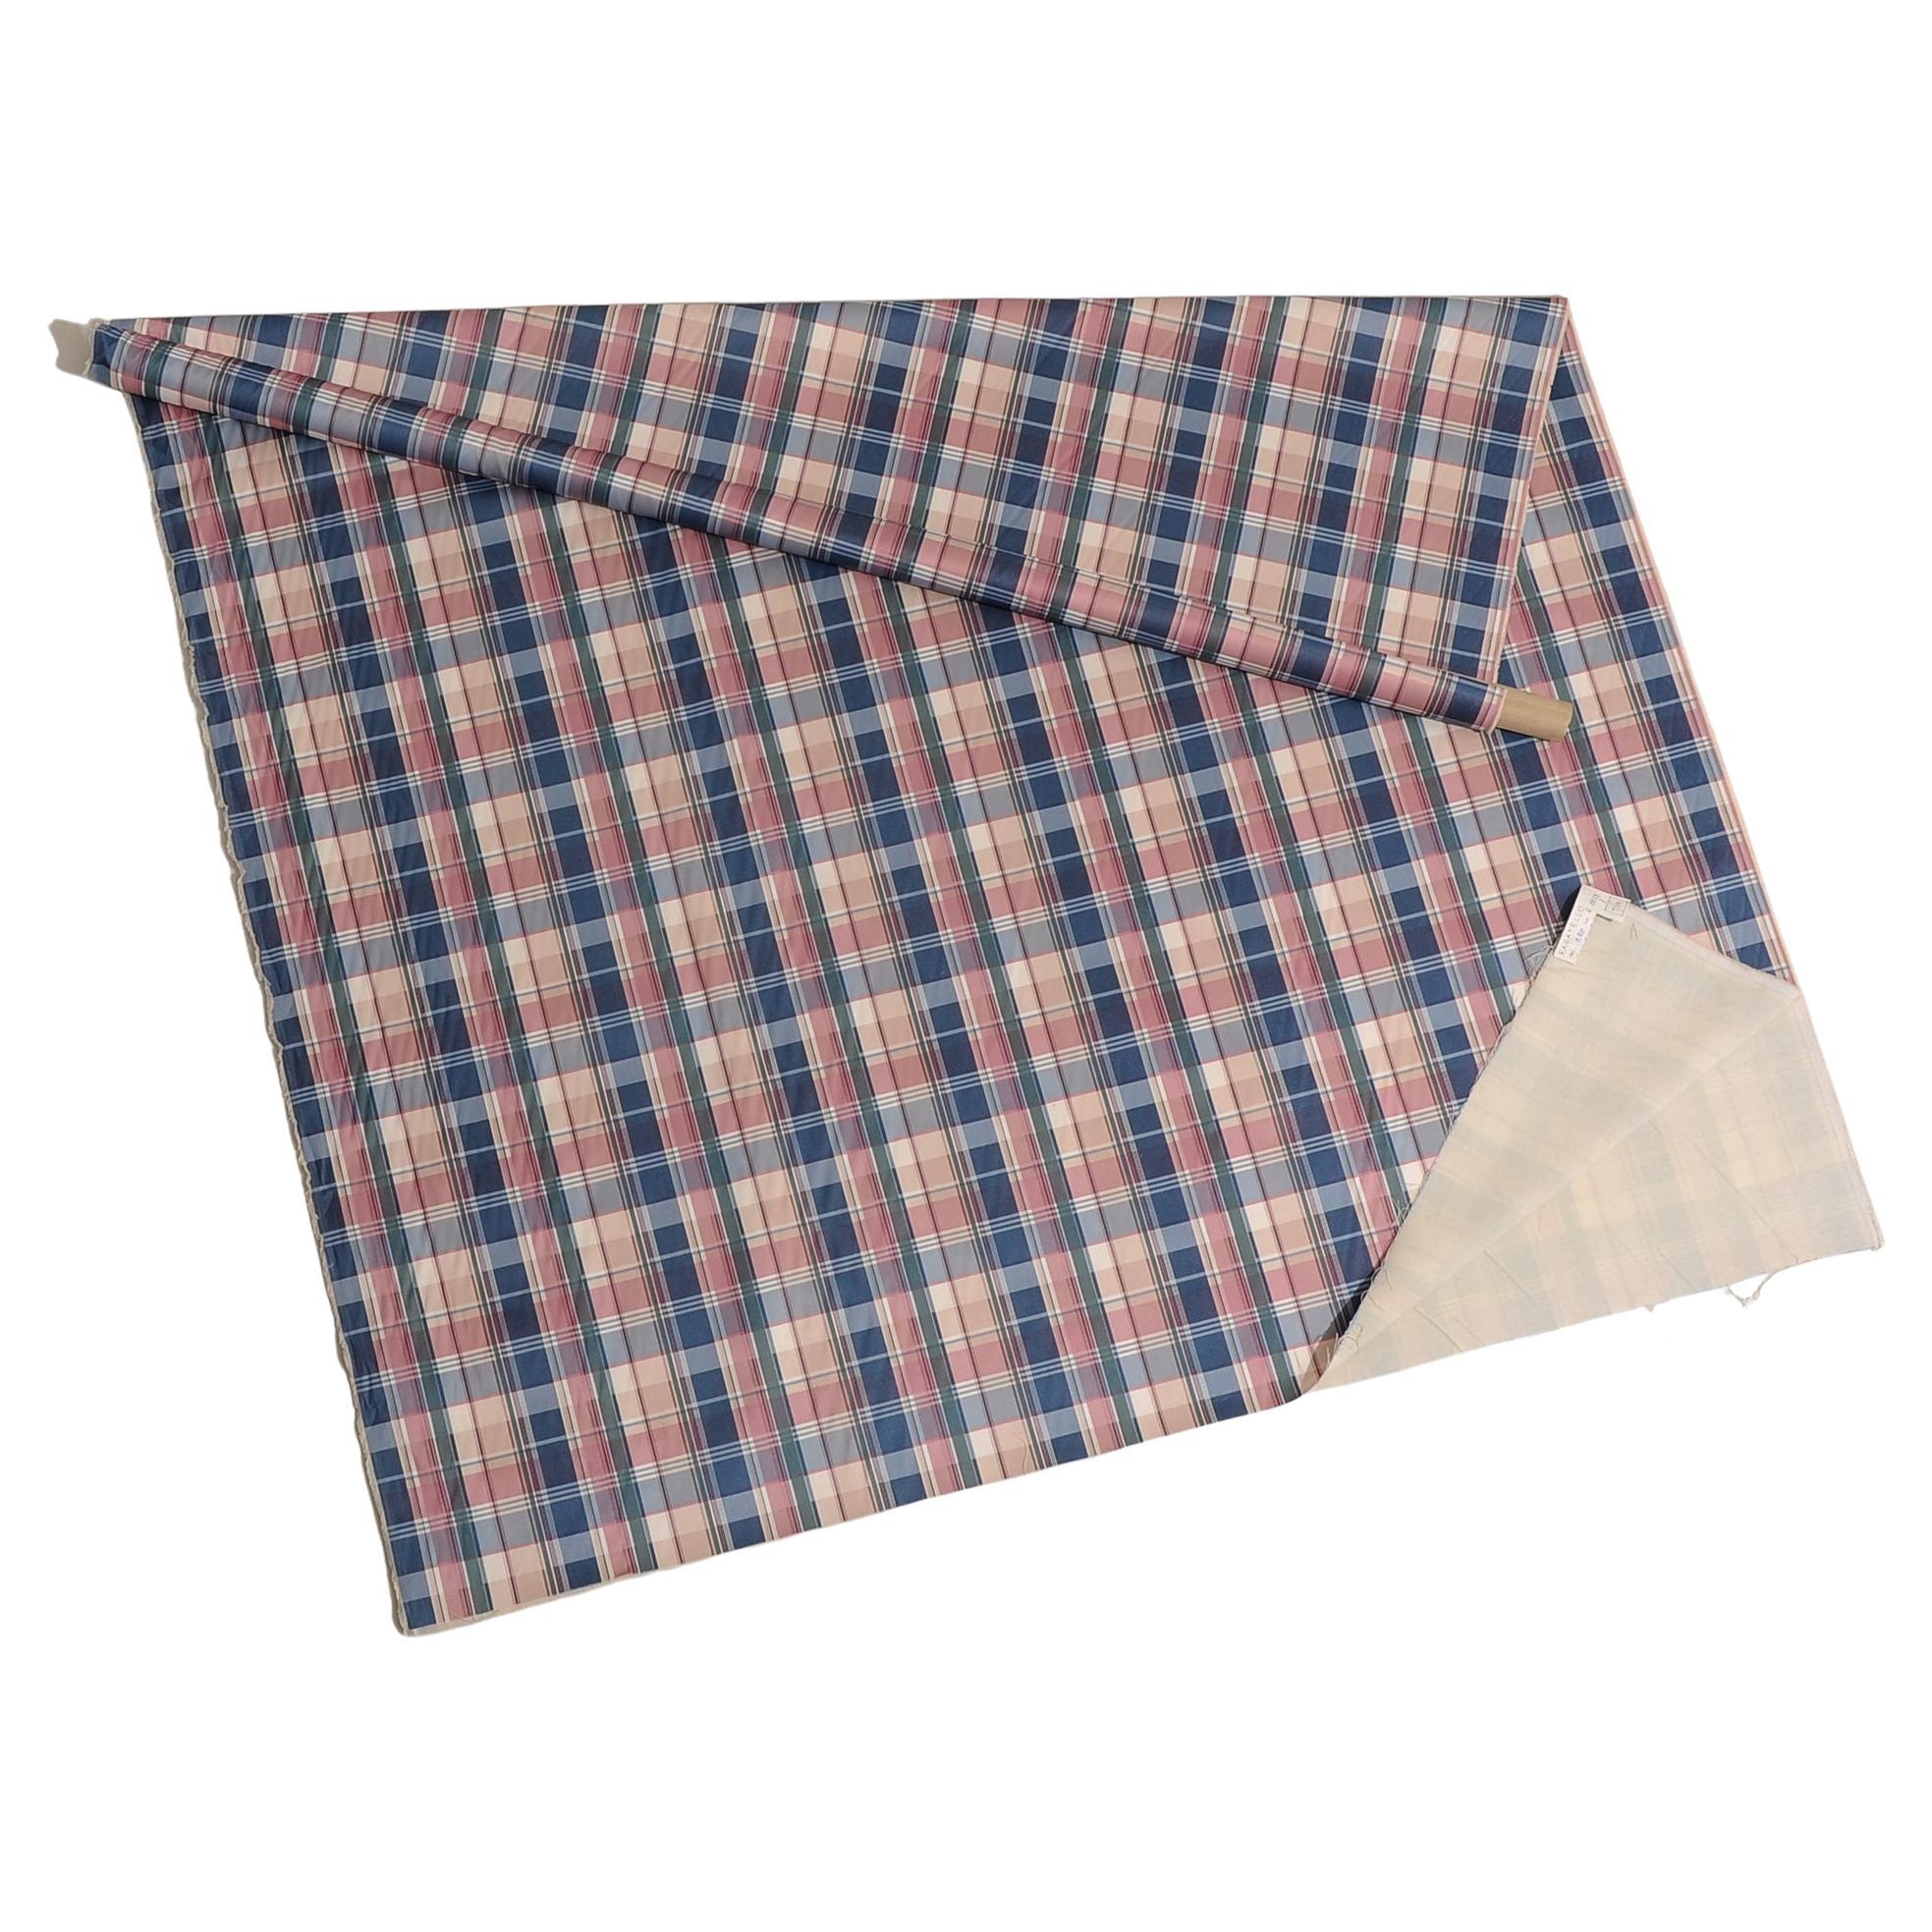 Tartan Satin Textile Fabric: On OFFER